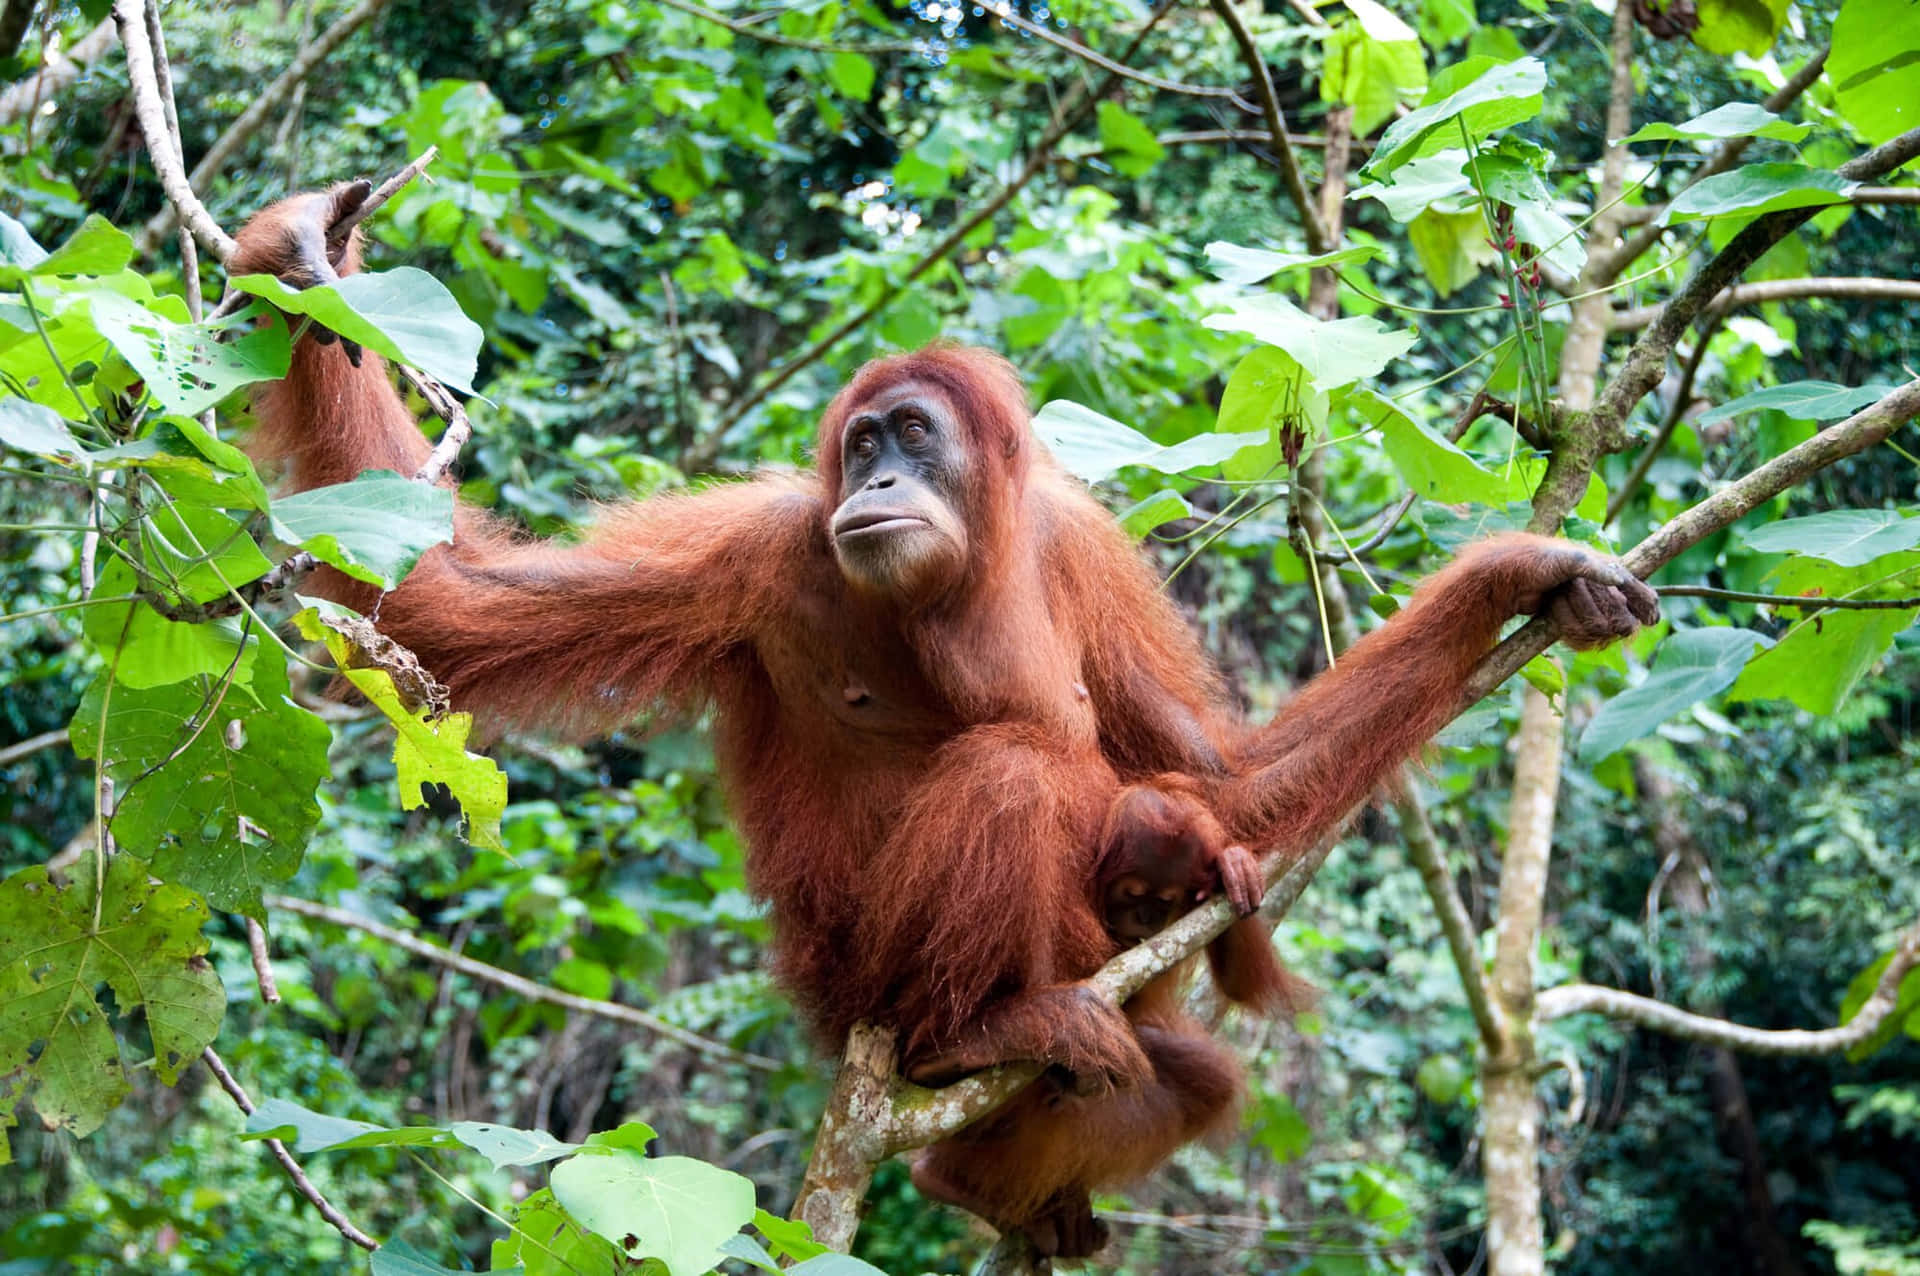 An Orangutan Swinging in the Jungle